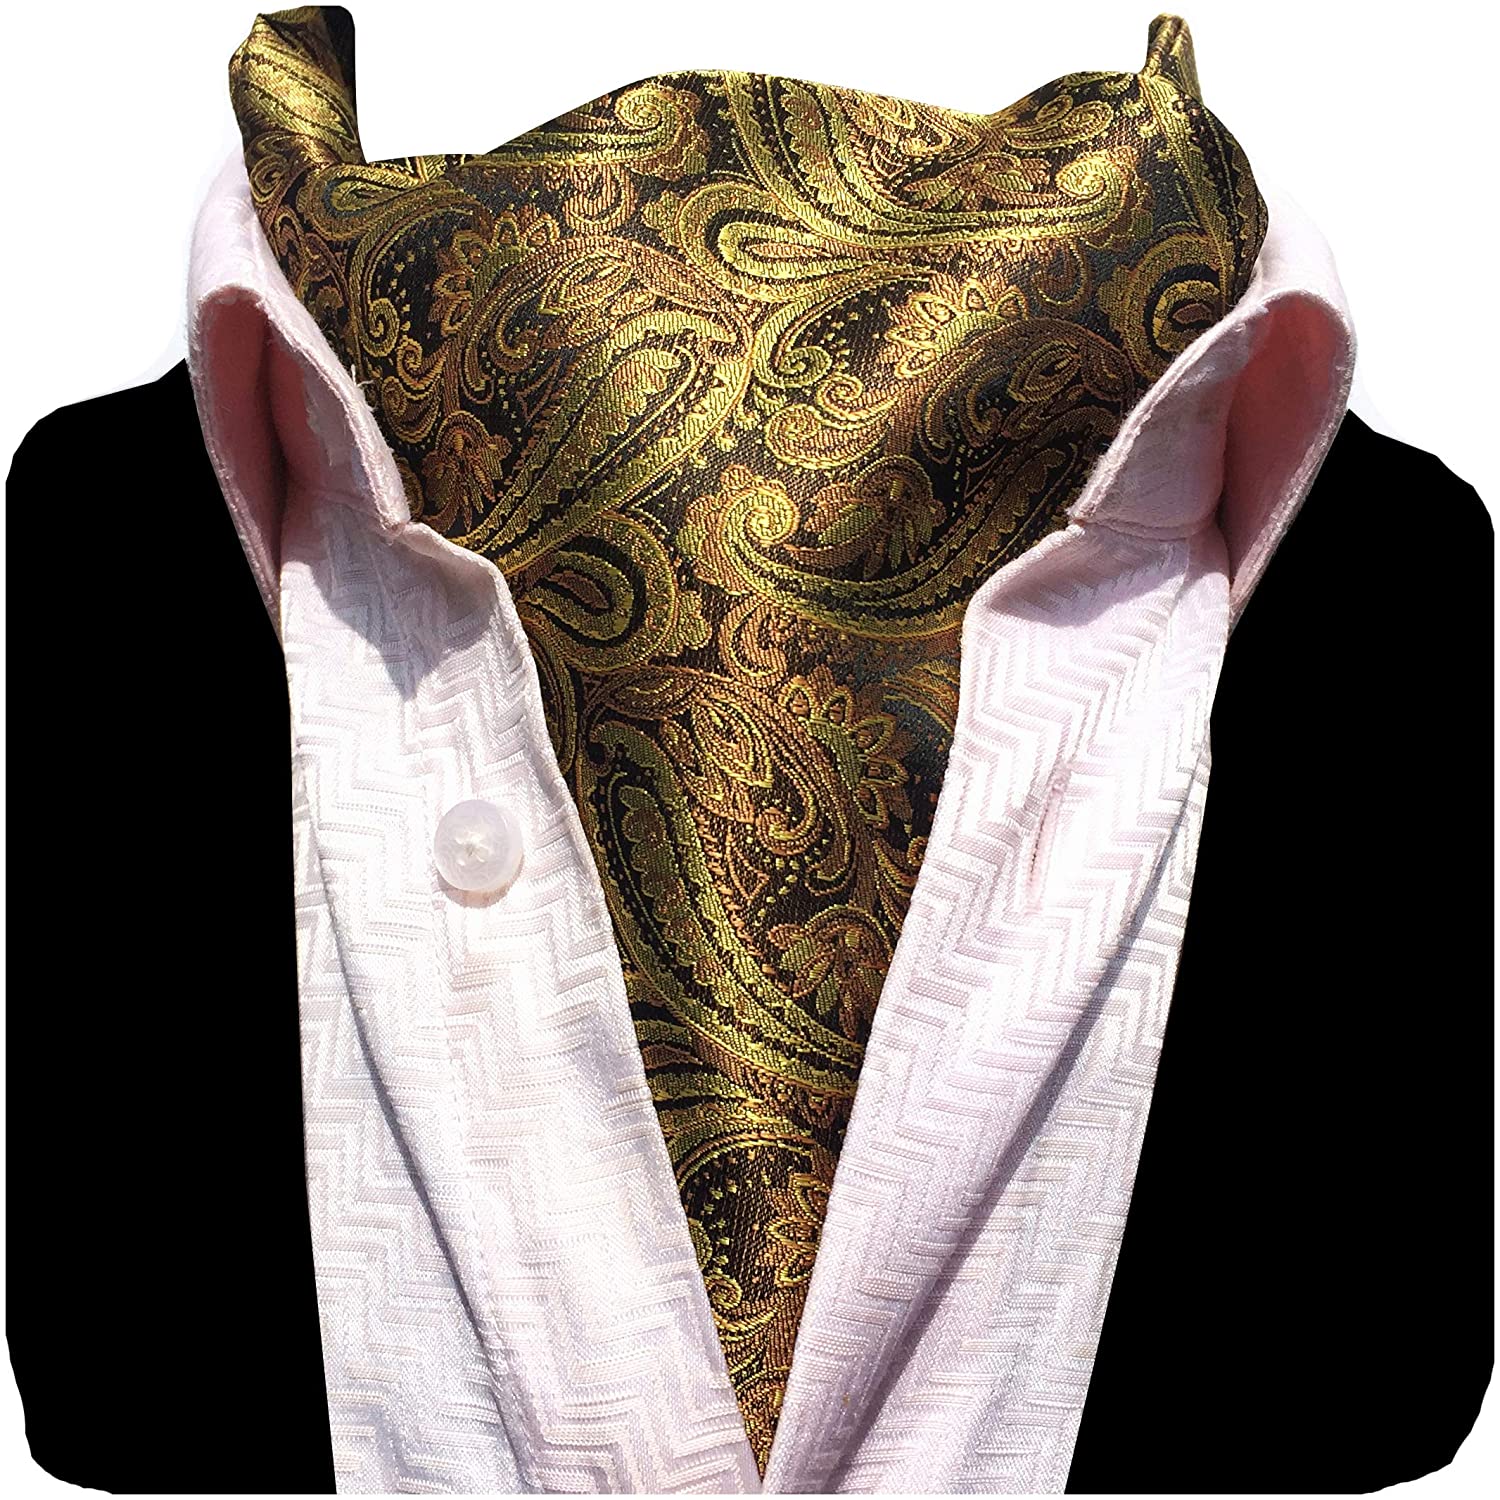 GUSLESON Men's Cravat Self Tie Paisley Jacquard Woven Floral Luxury Ascot